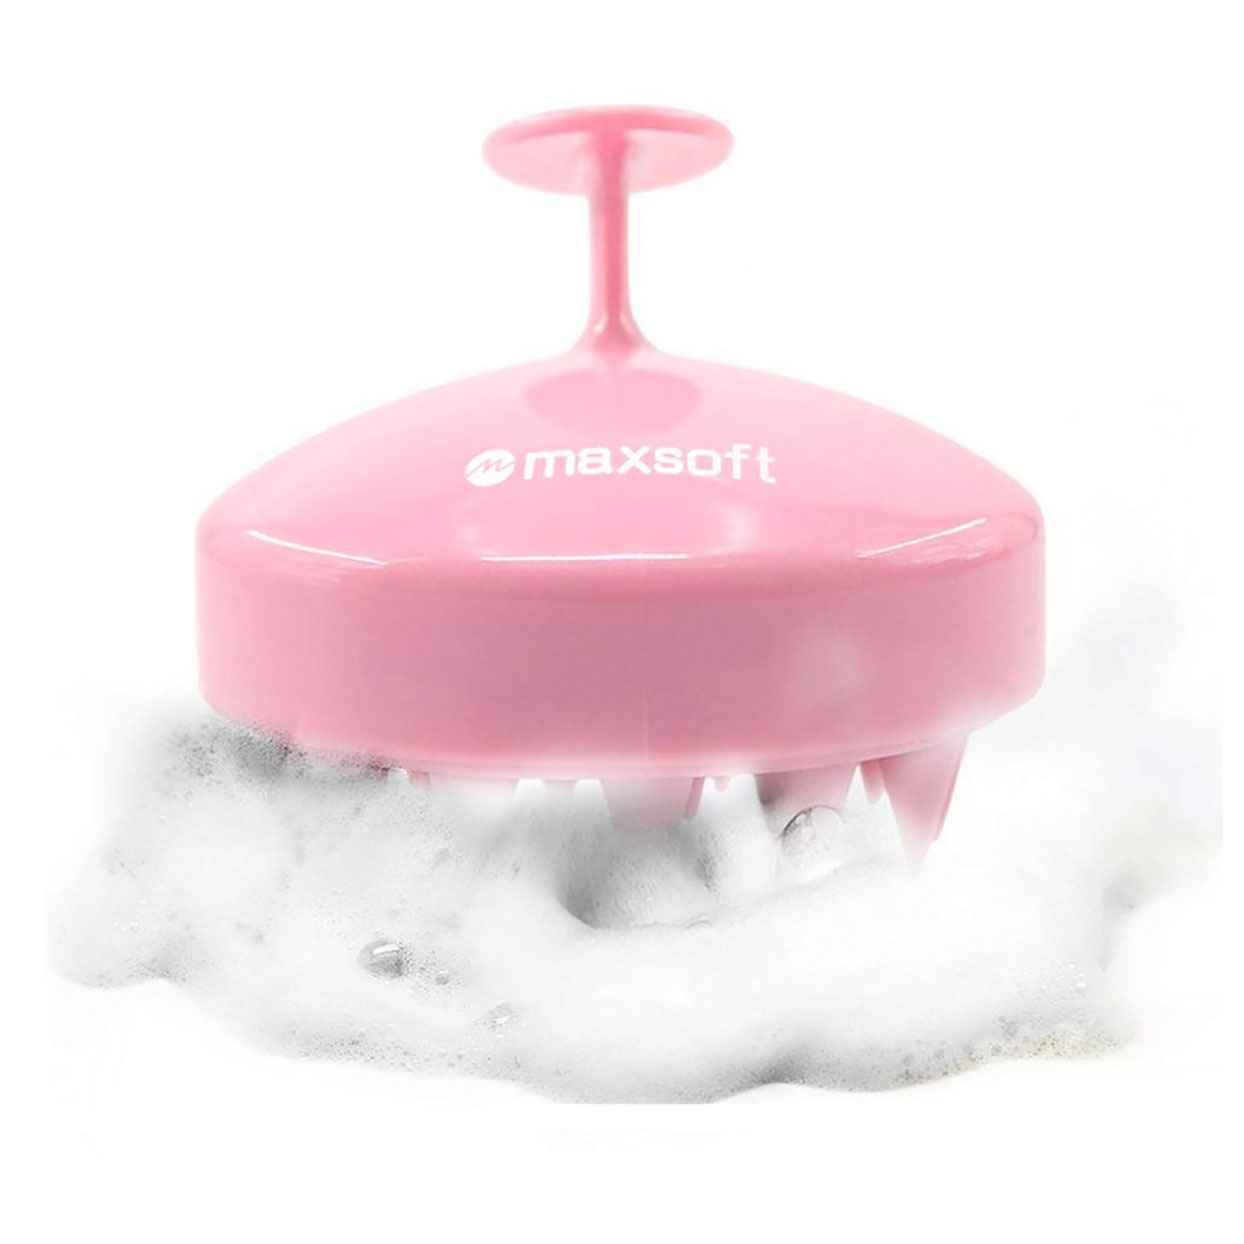 maxsoft-scalp-care-brush.jpg